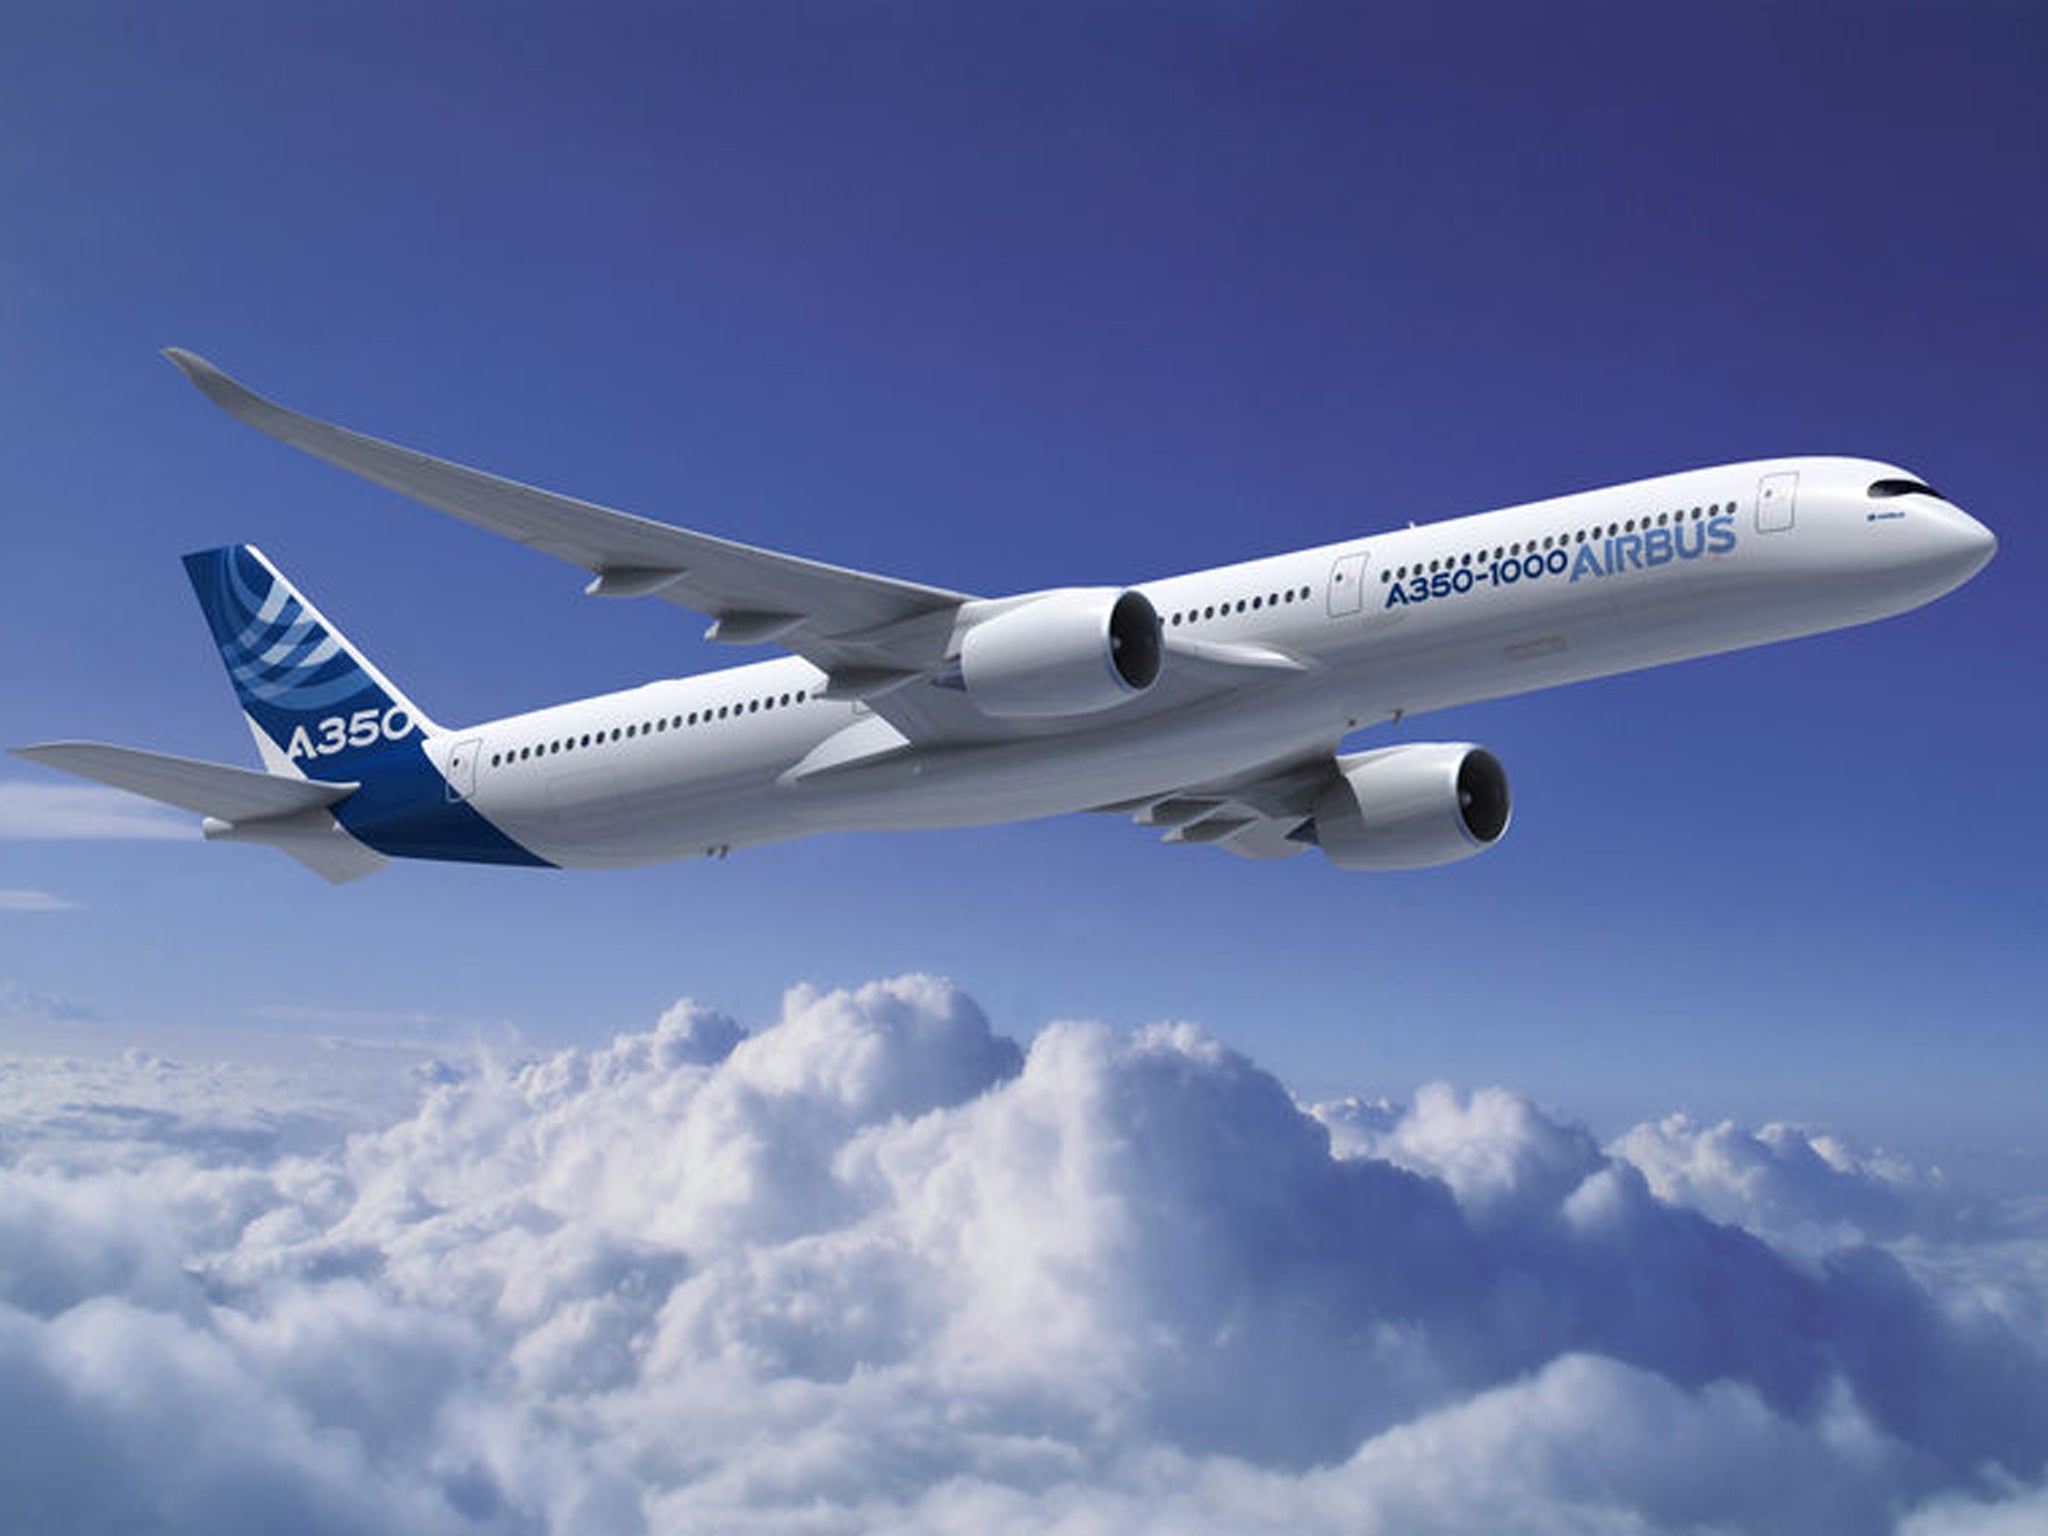 New Airbus A350 aircraft